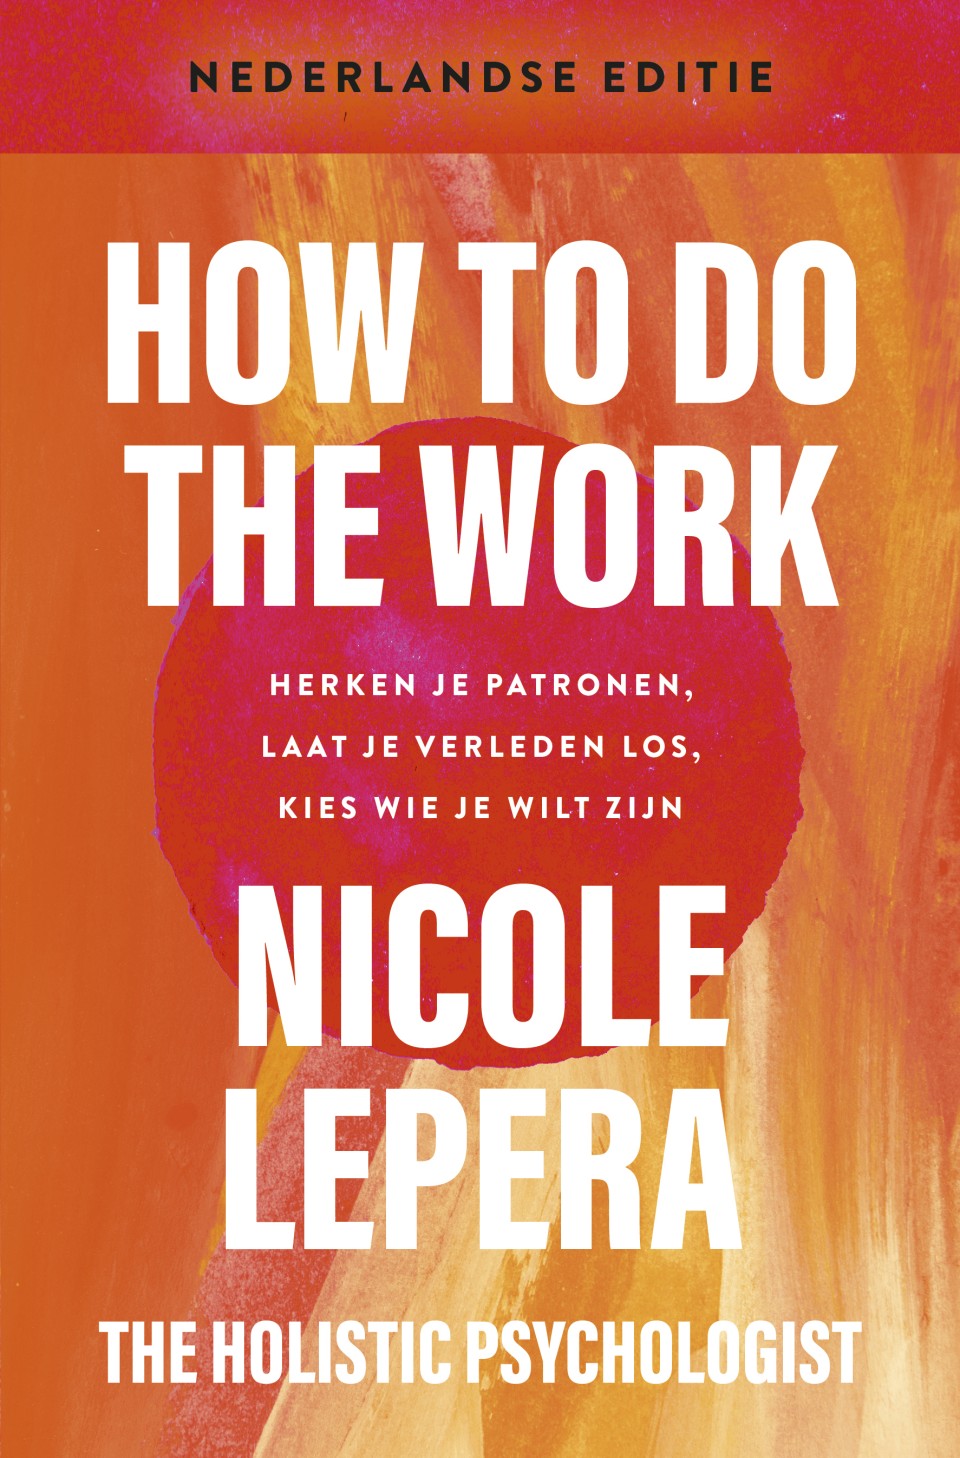 2. How to do the work– Nederlandse editie